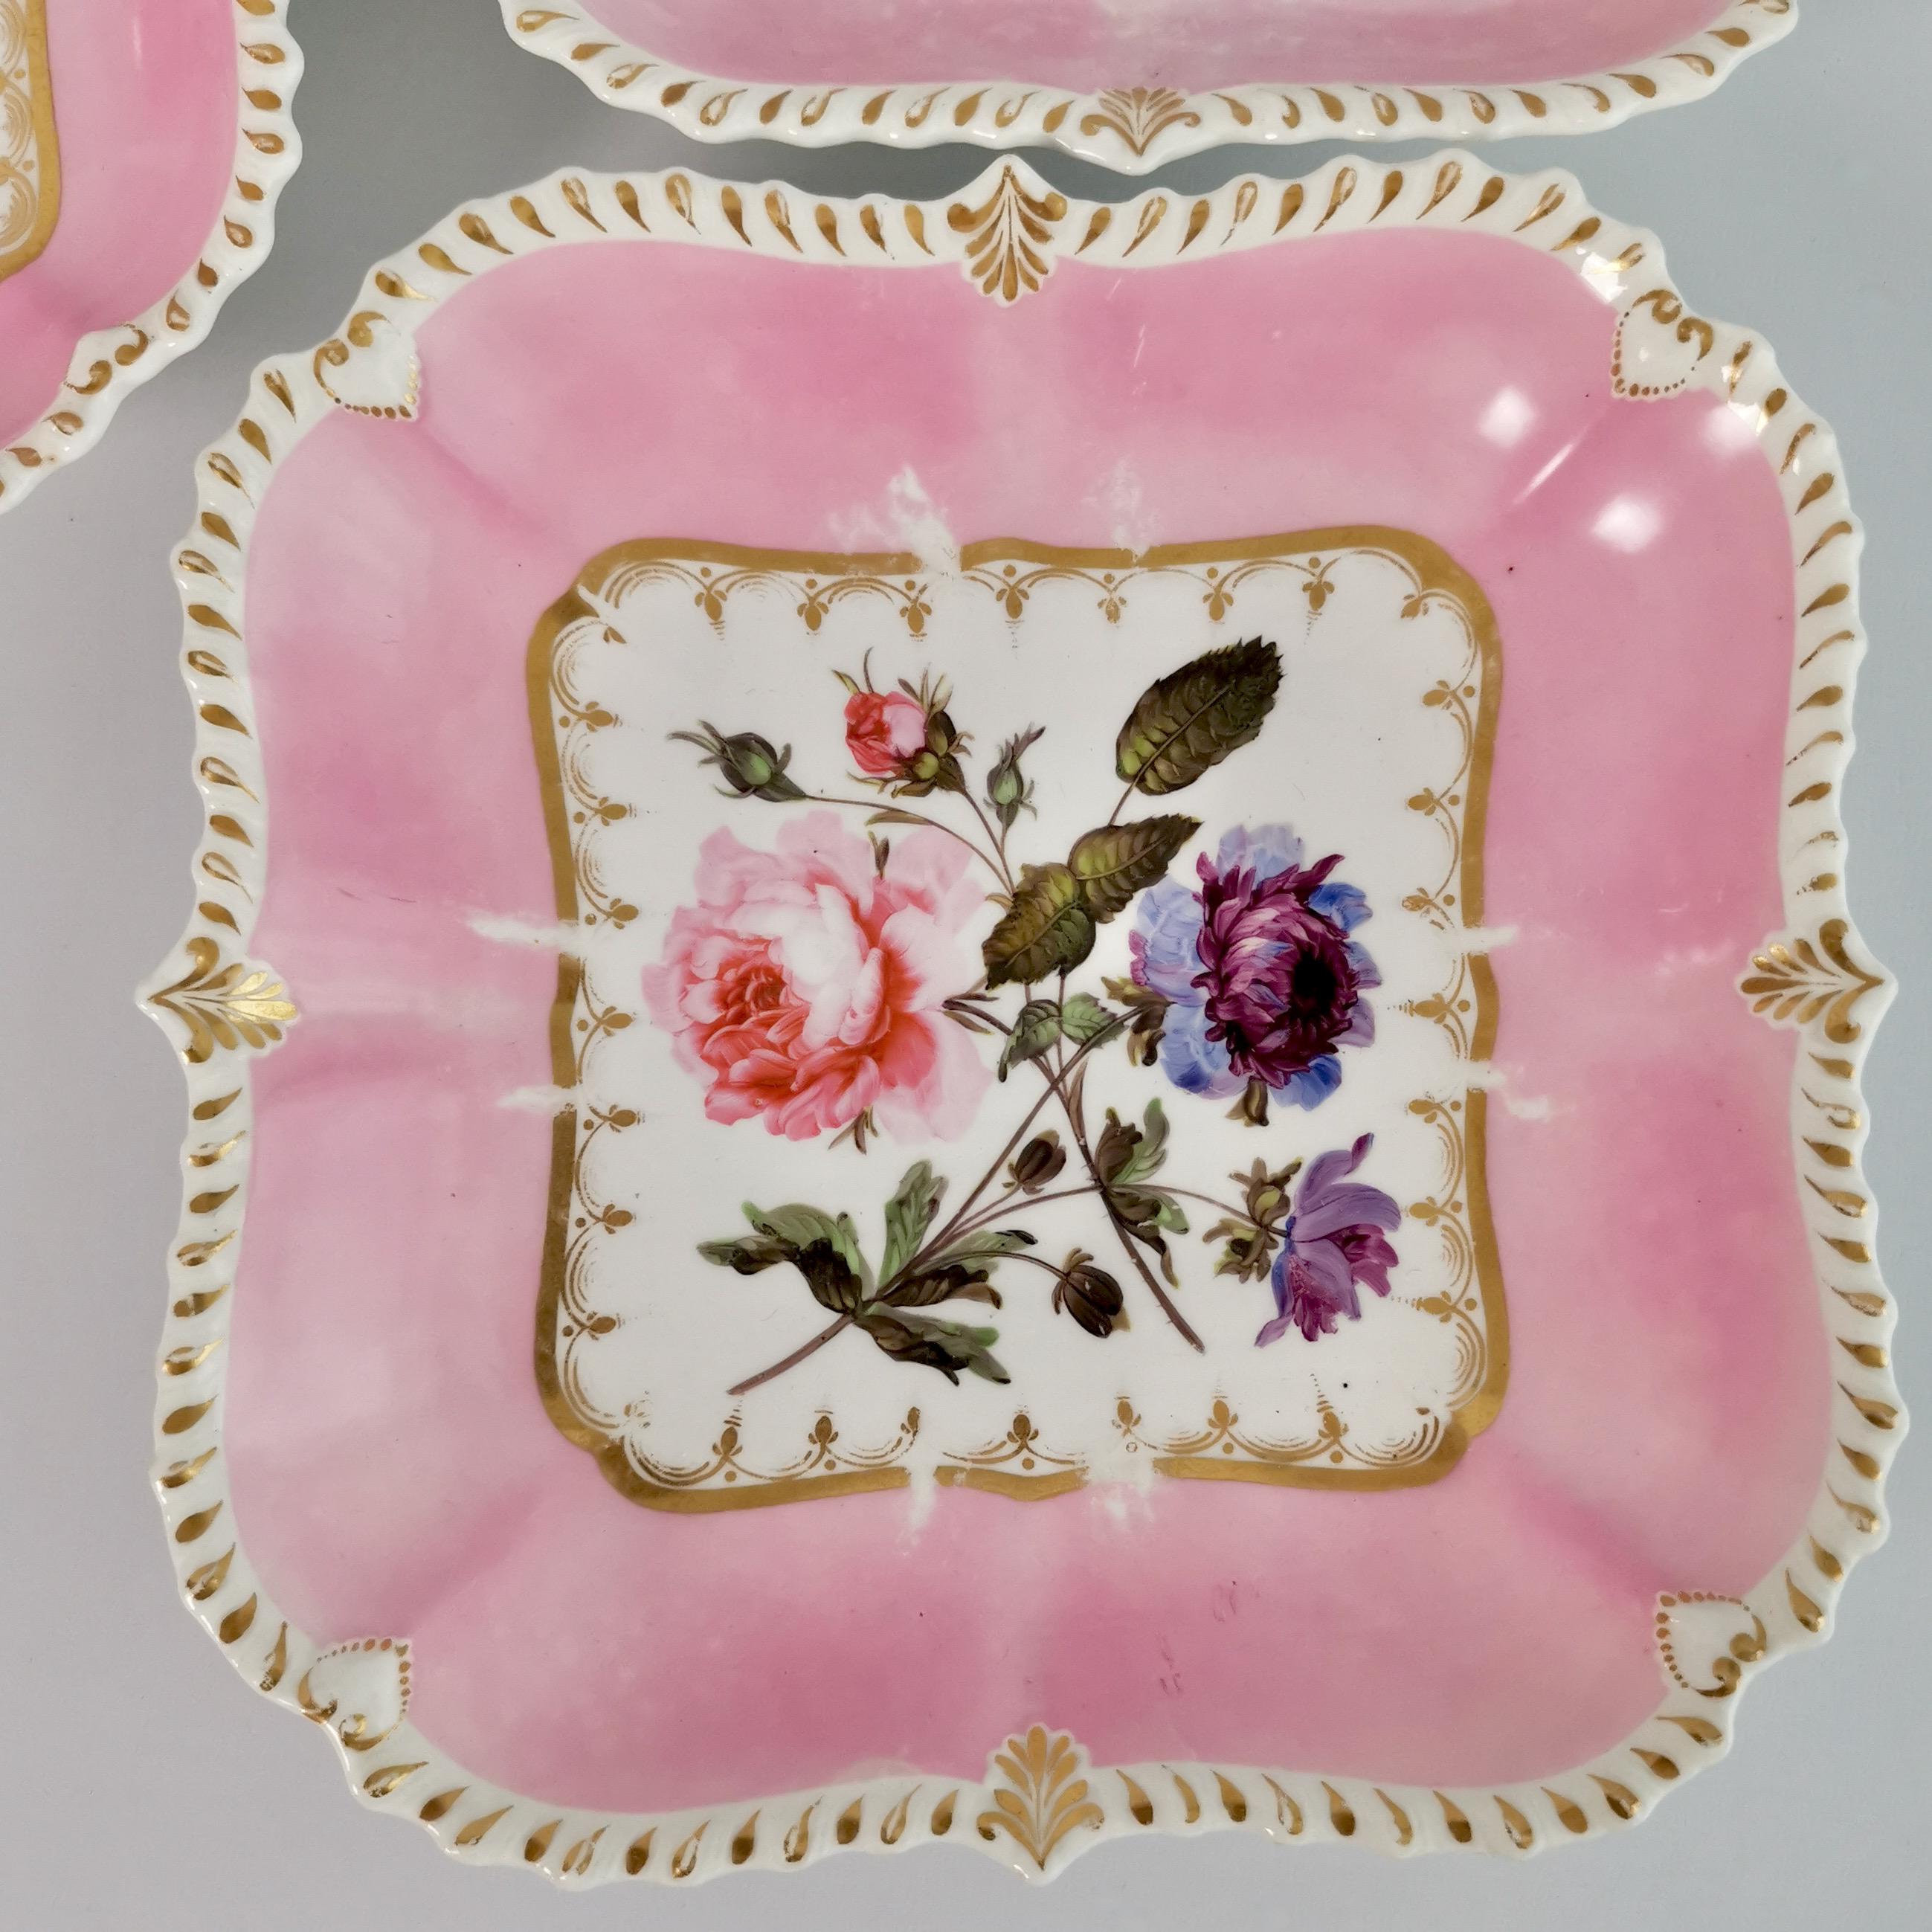 Early 19th Century Coalport Porcelain Dessert Service, Pink with Flowers, Regency 1820-1825